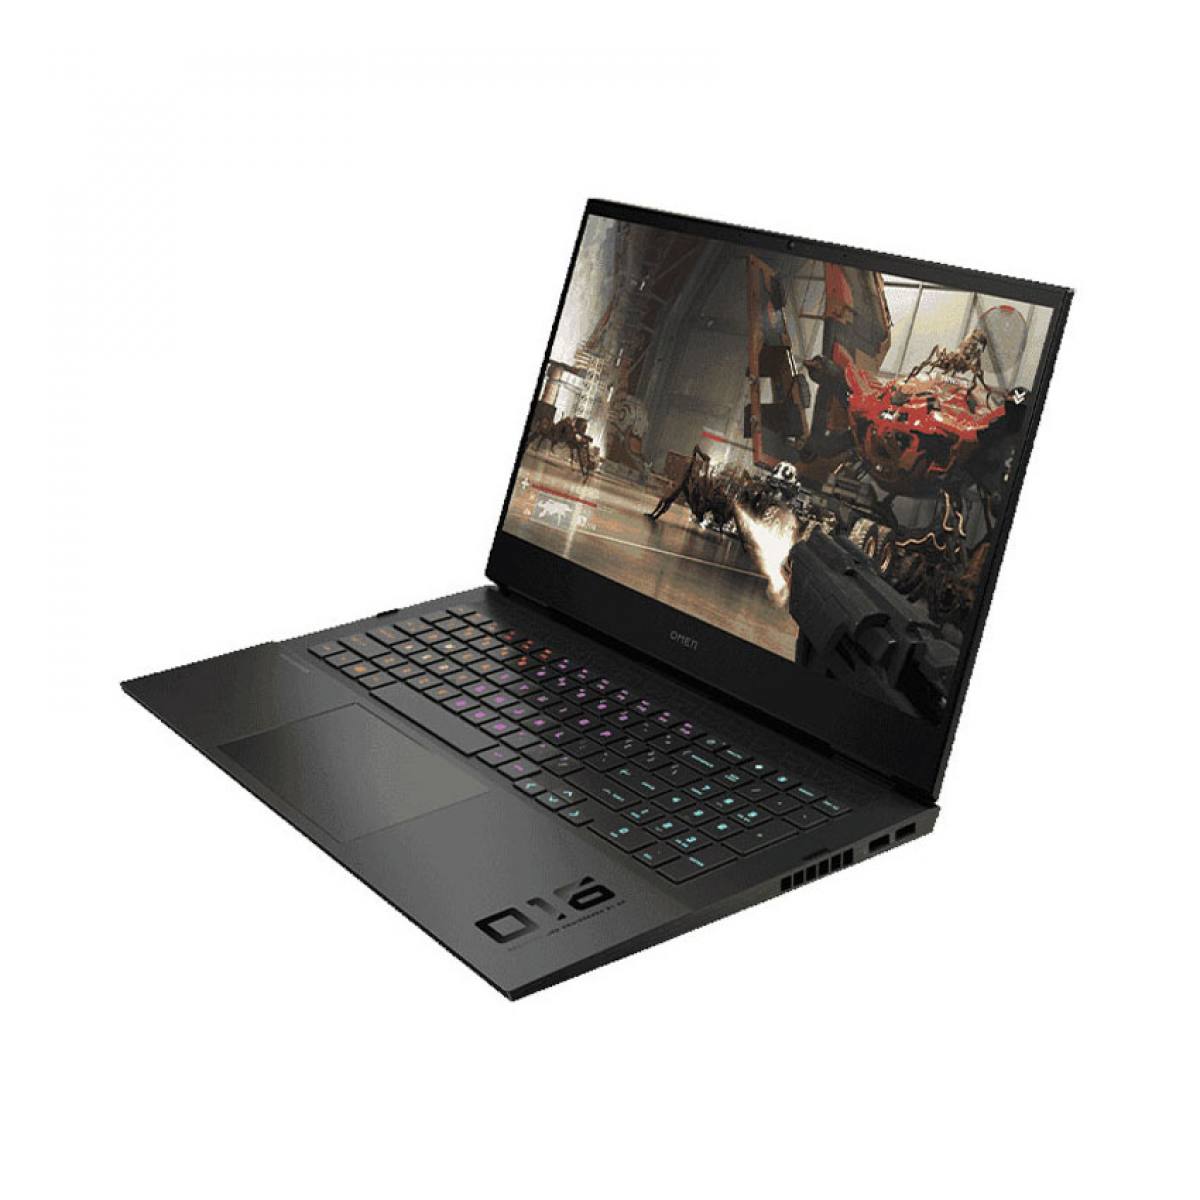 Laptop HP Gaming Omen 16-b0141TX (i5 11400H/16GB RAM/1TB SSD)